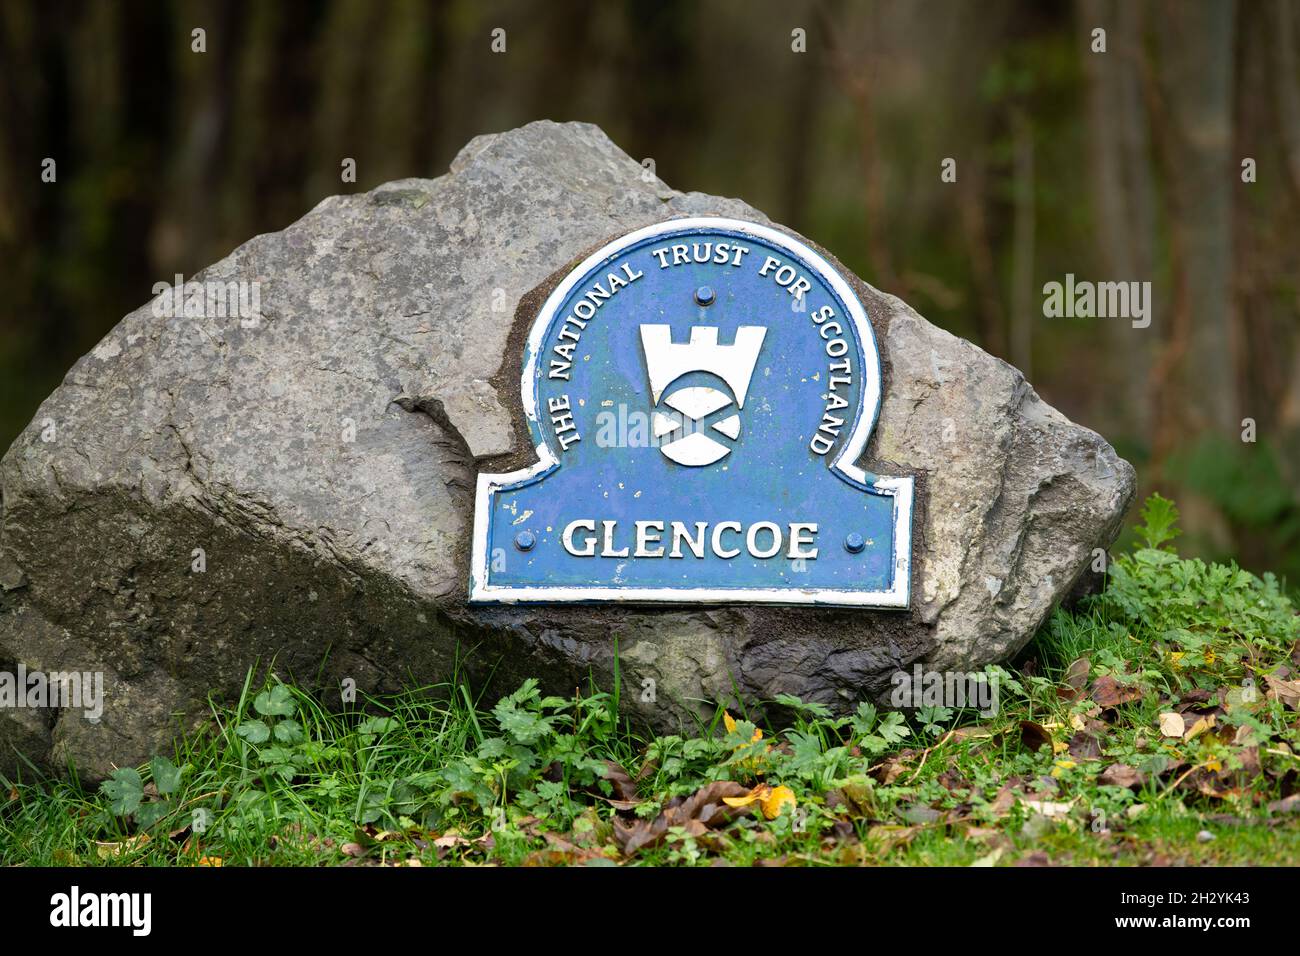 Glencoe National Trust For Scotland sign, Scotland, UK Stock Photo